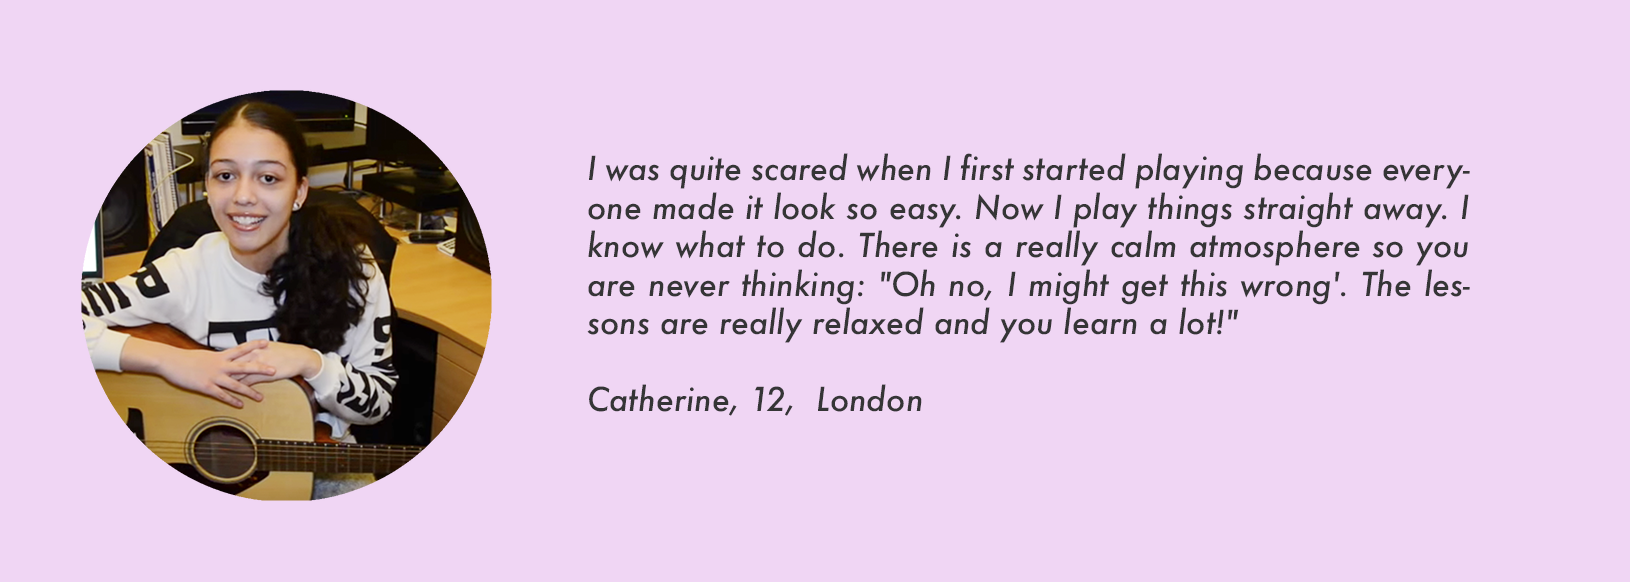 Catherine testimonial.png